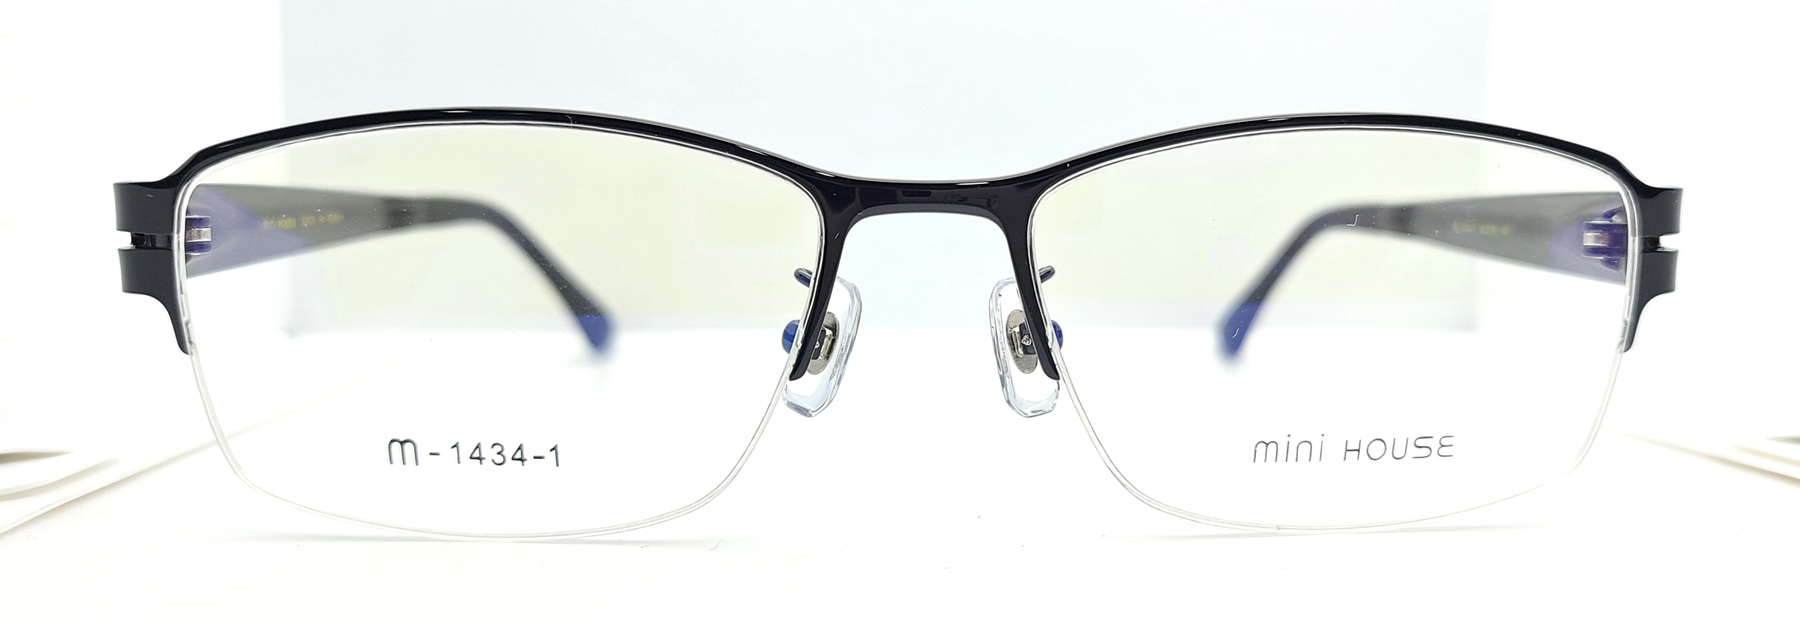 MINIHOUSE M-1434-1, Korean glasses, sunglasses, eyeglasses, glasses